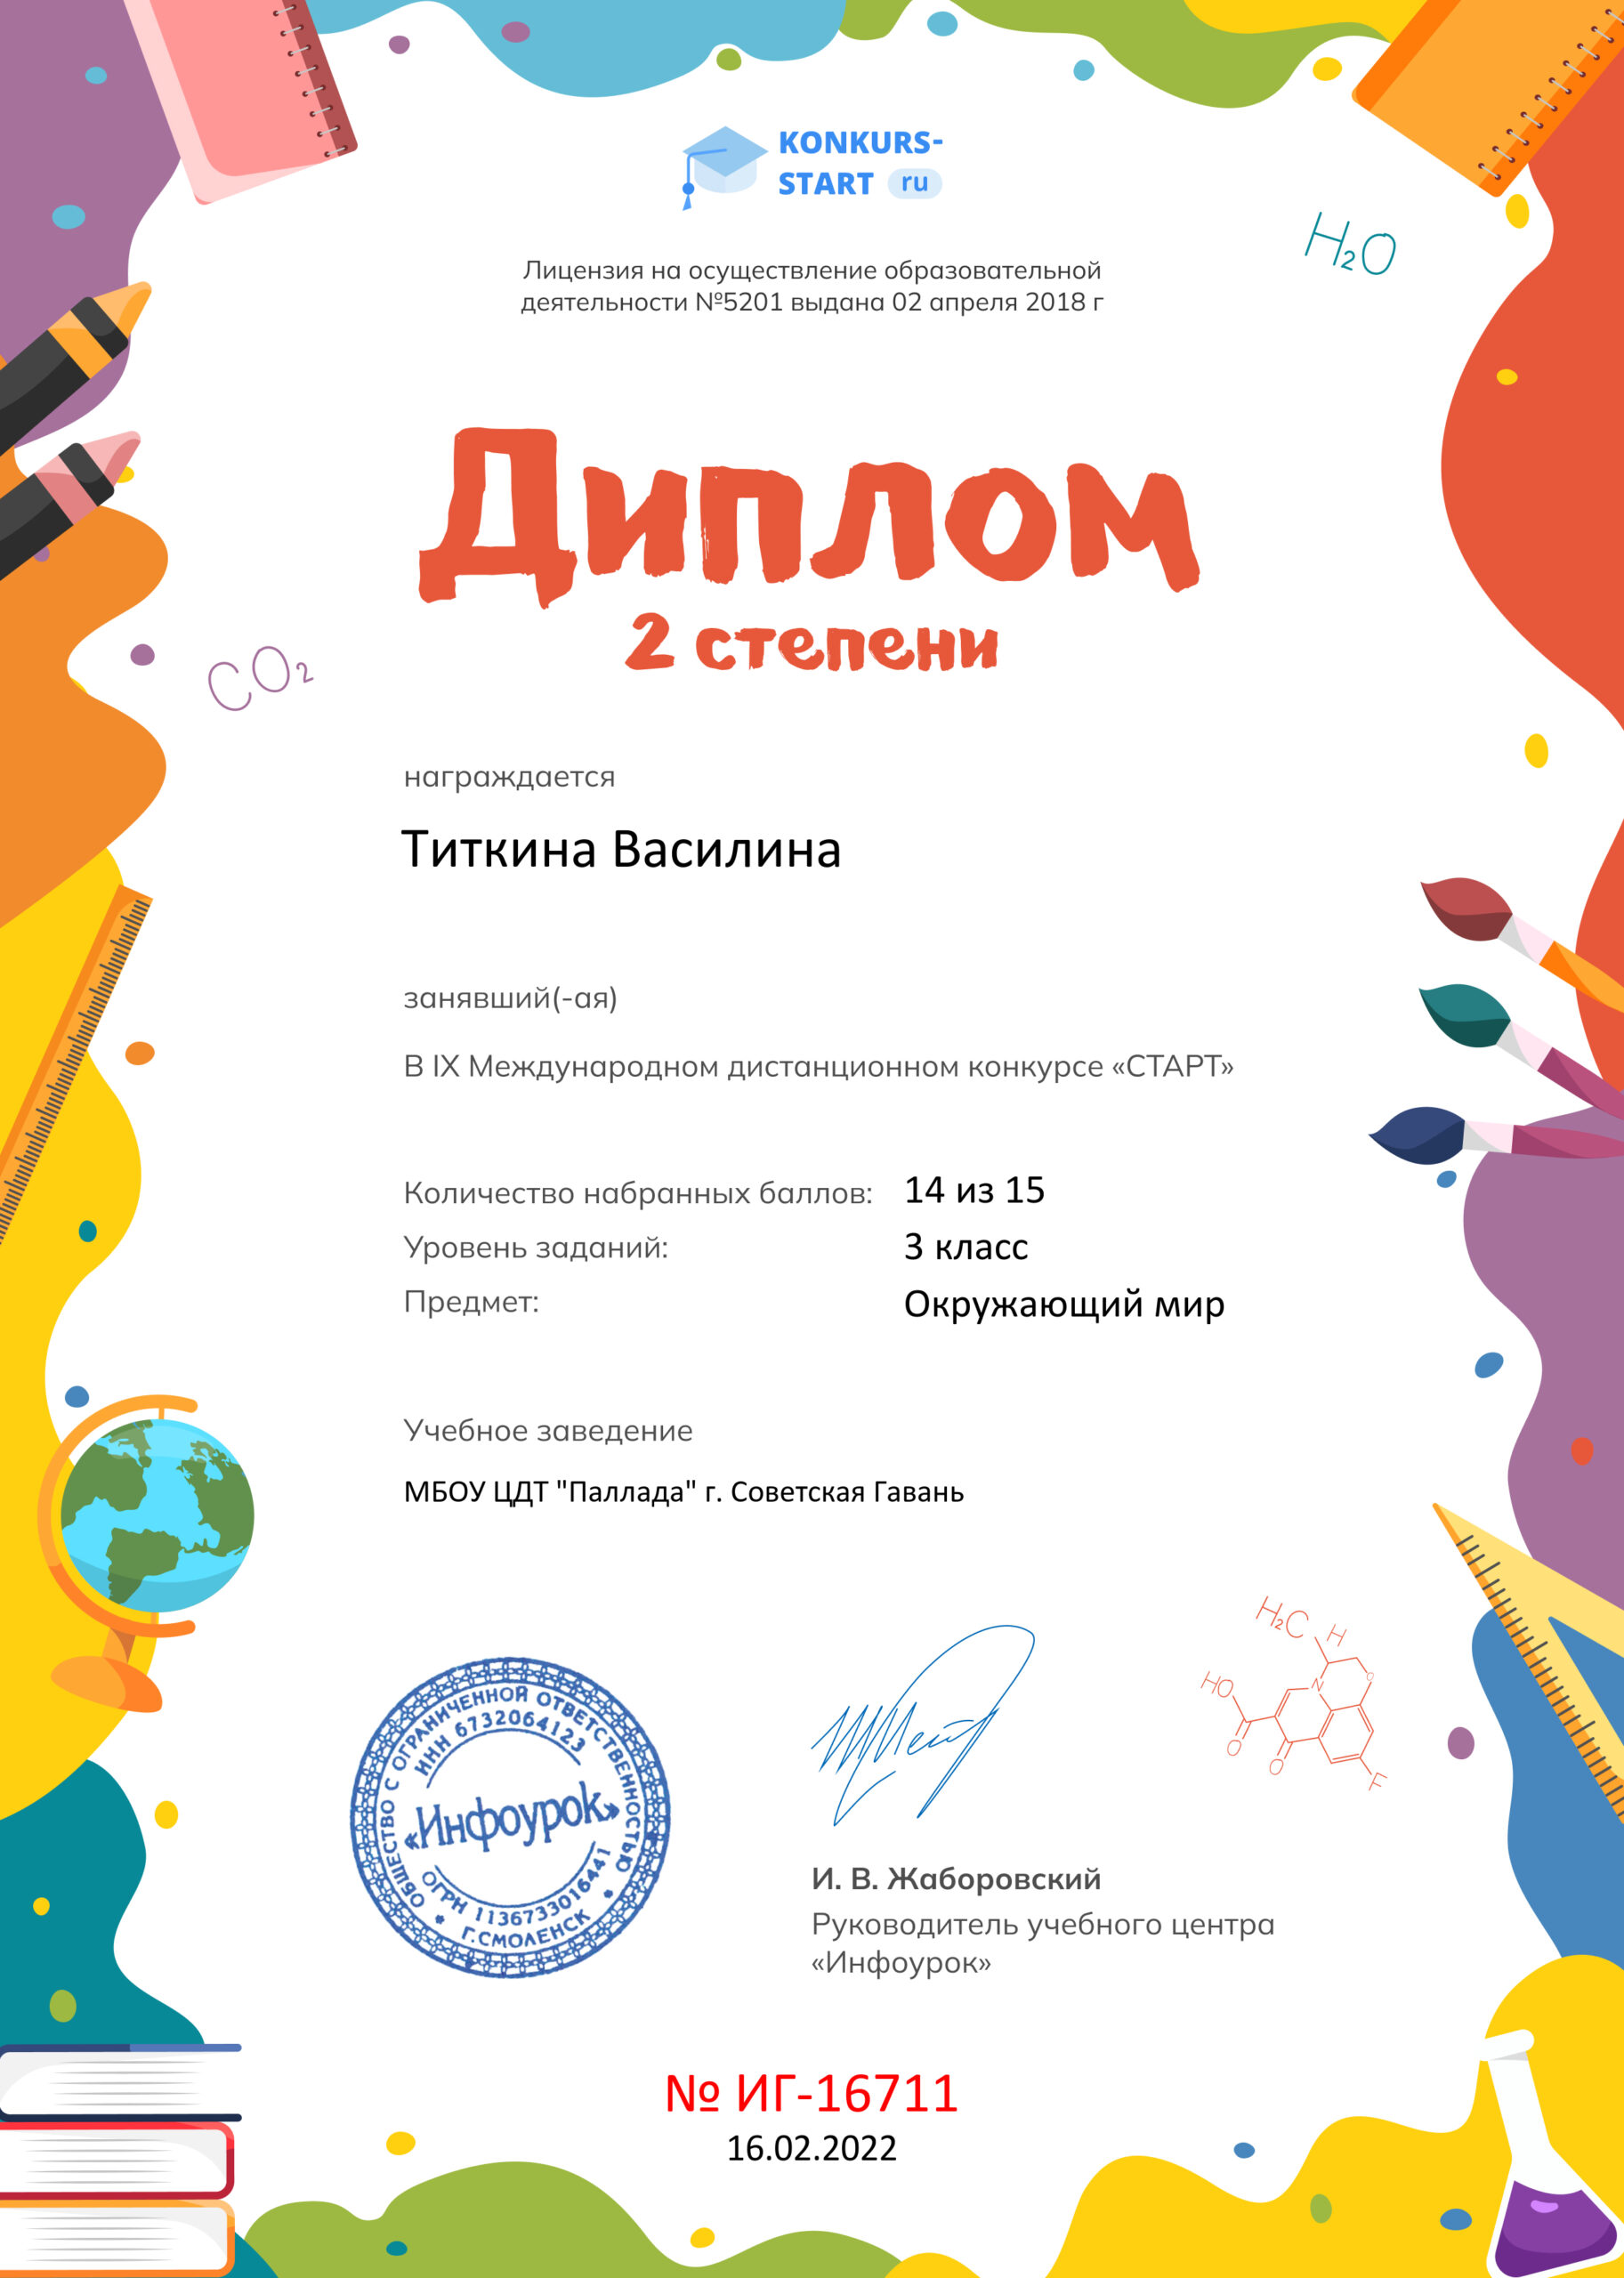 Диплом 2 степени от проекта konkurs-start.ru (1)